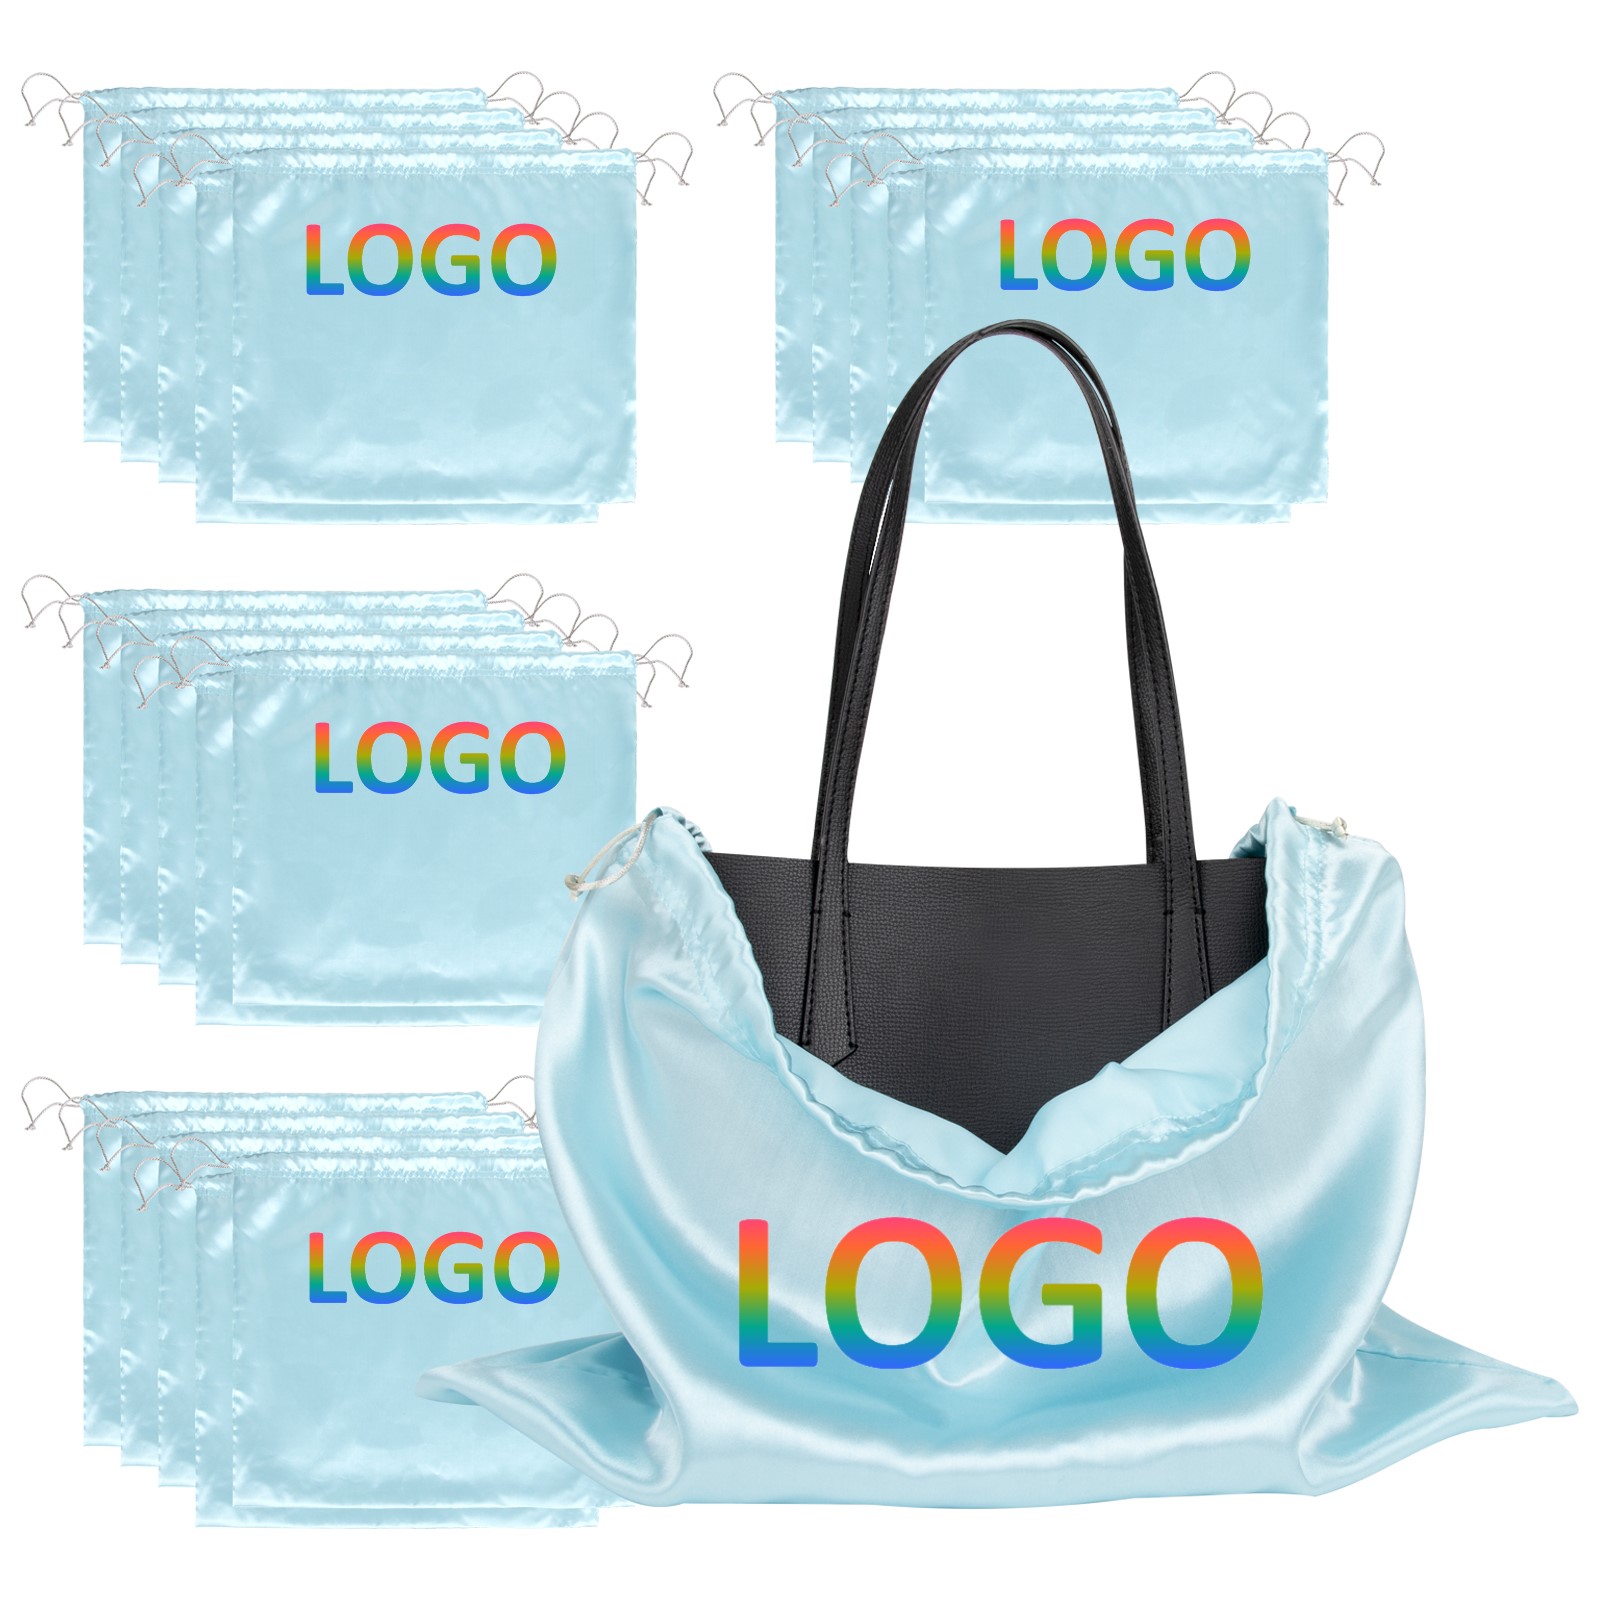 20 Pcs Silk Satin Dust Bags for Handbags Drawstring Dust Cover Bag